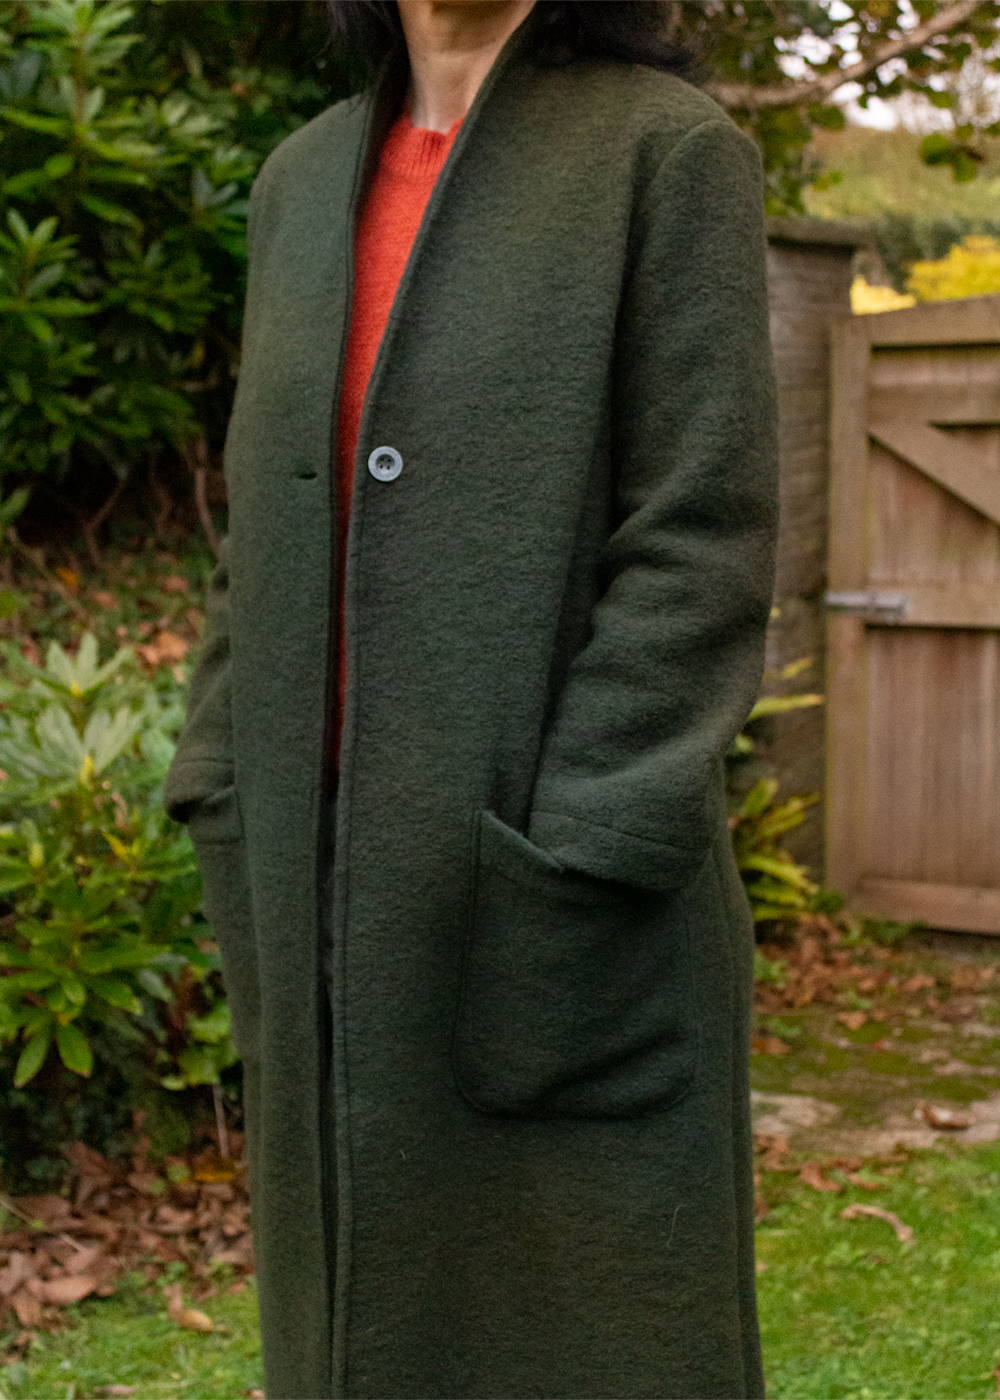 A model wearing a green woolen coat over a red jumper